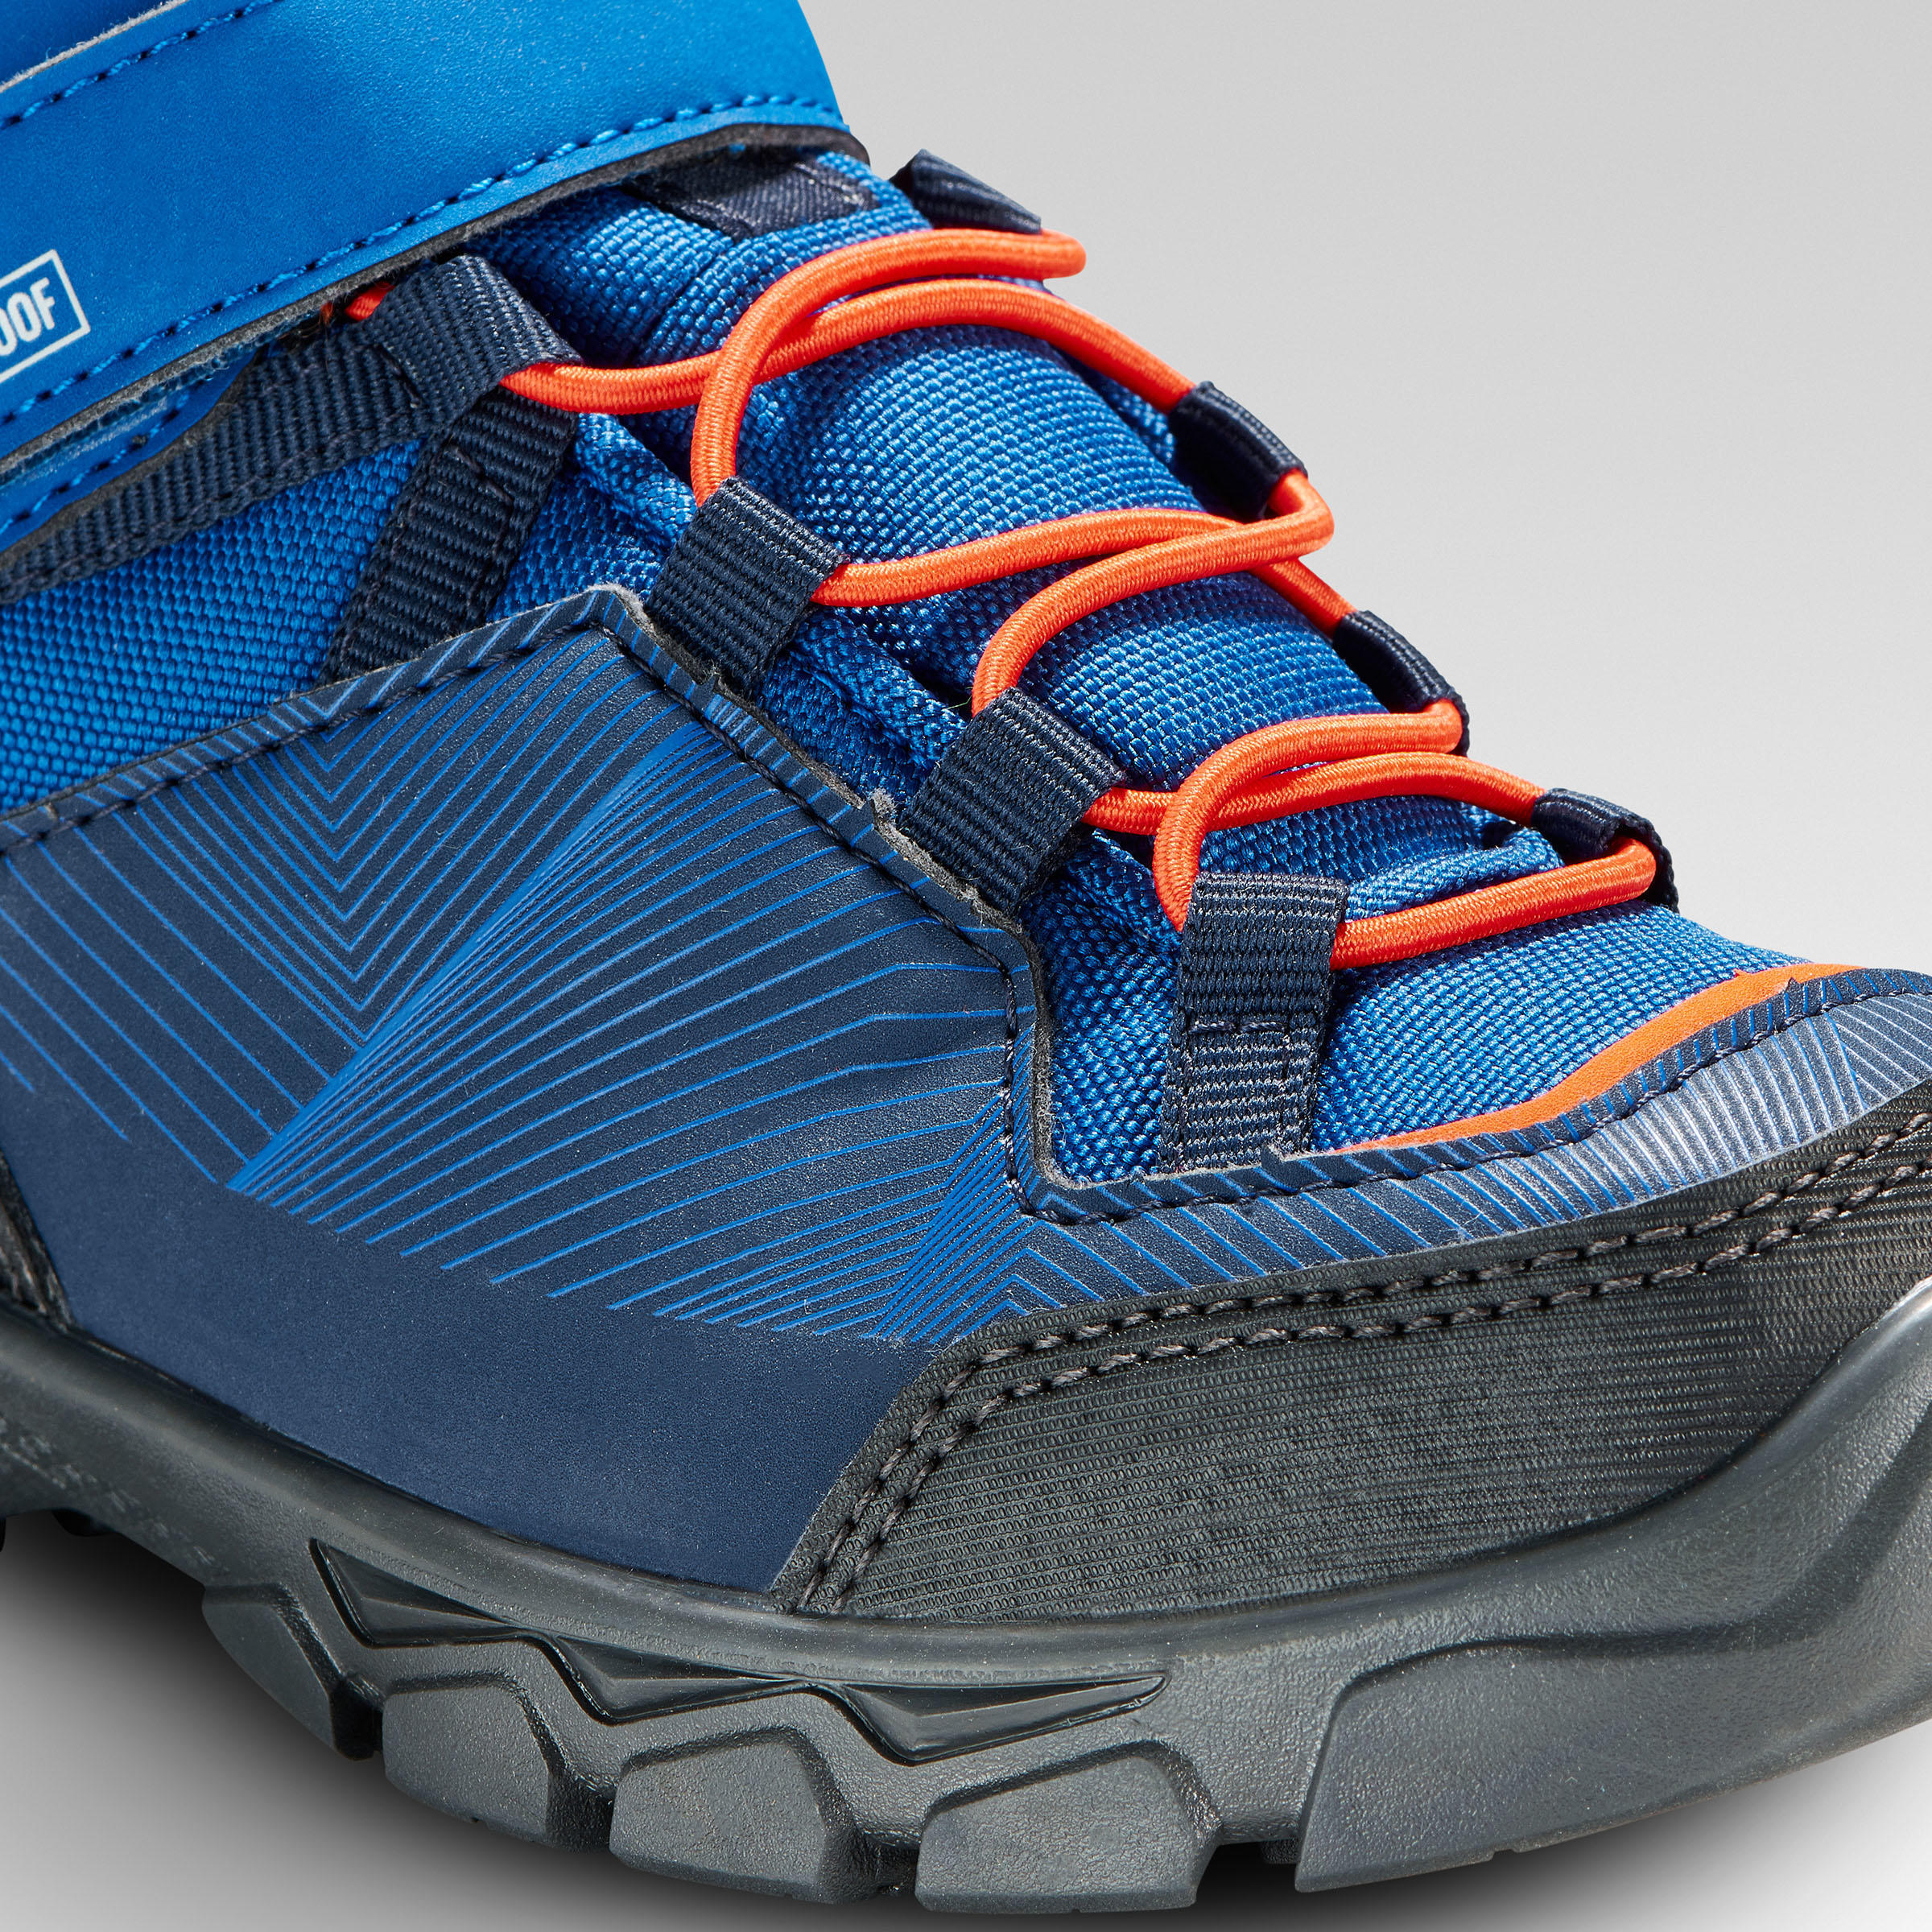 Children's waterproof walking shoes - MH120 MID blue - size jr. 10 - ad. 2 6/6